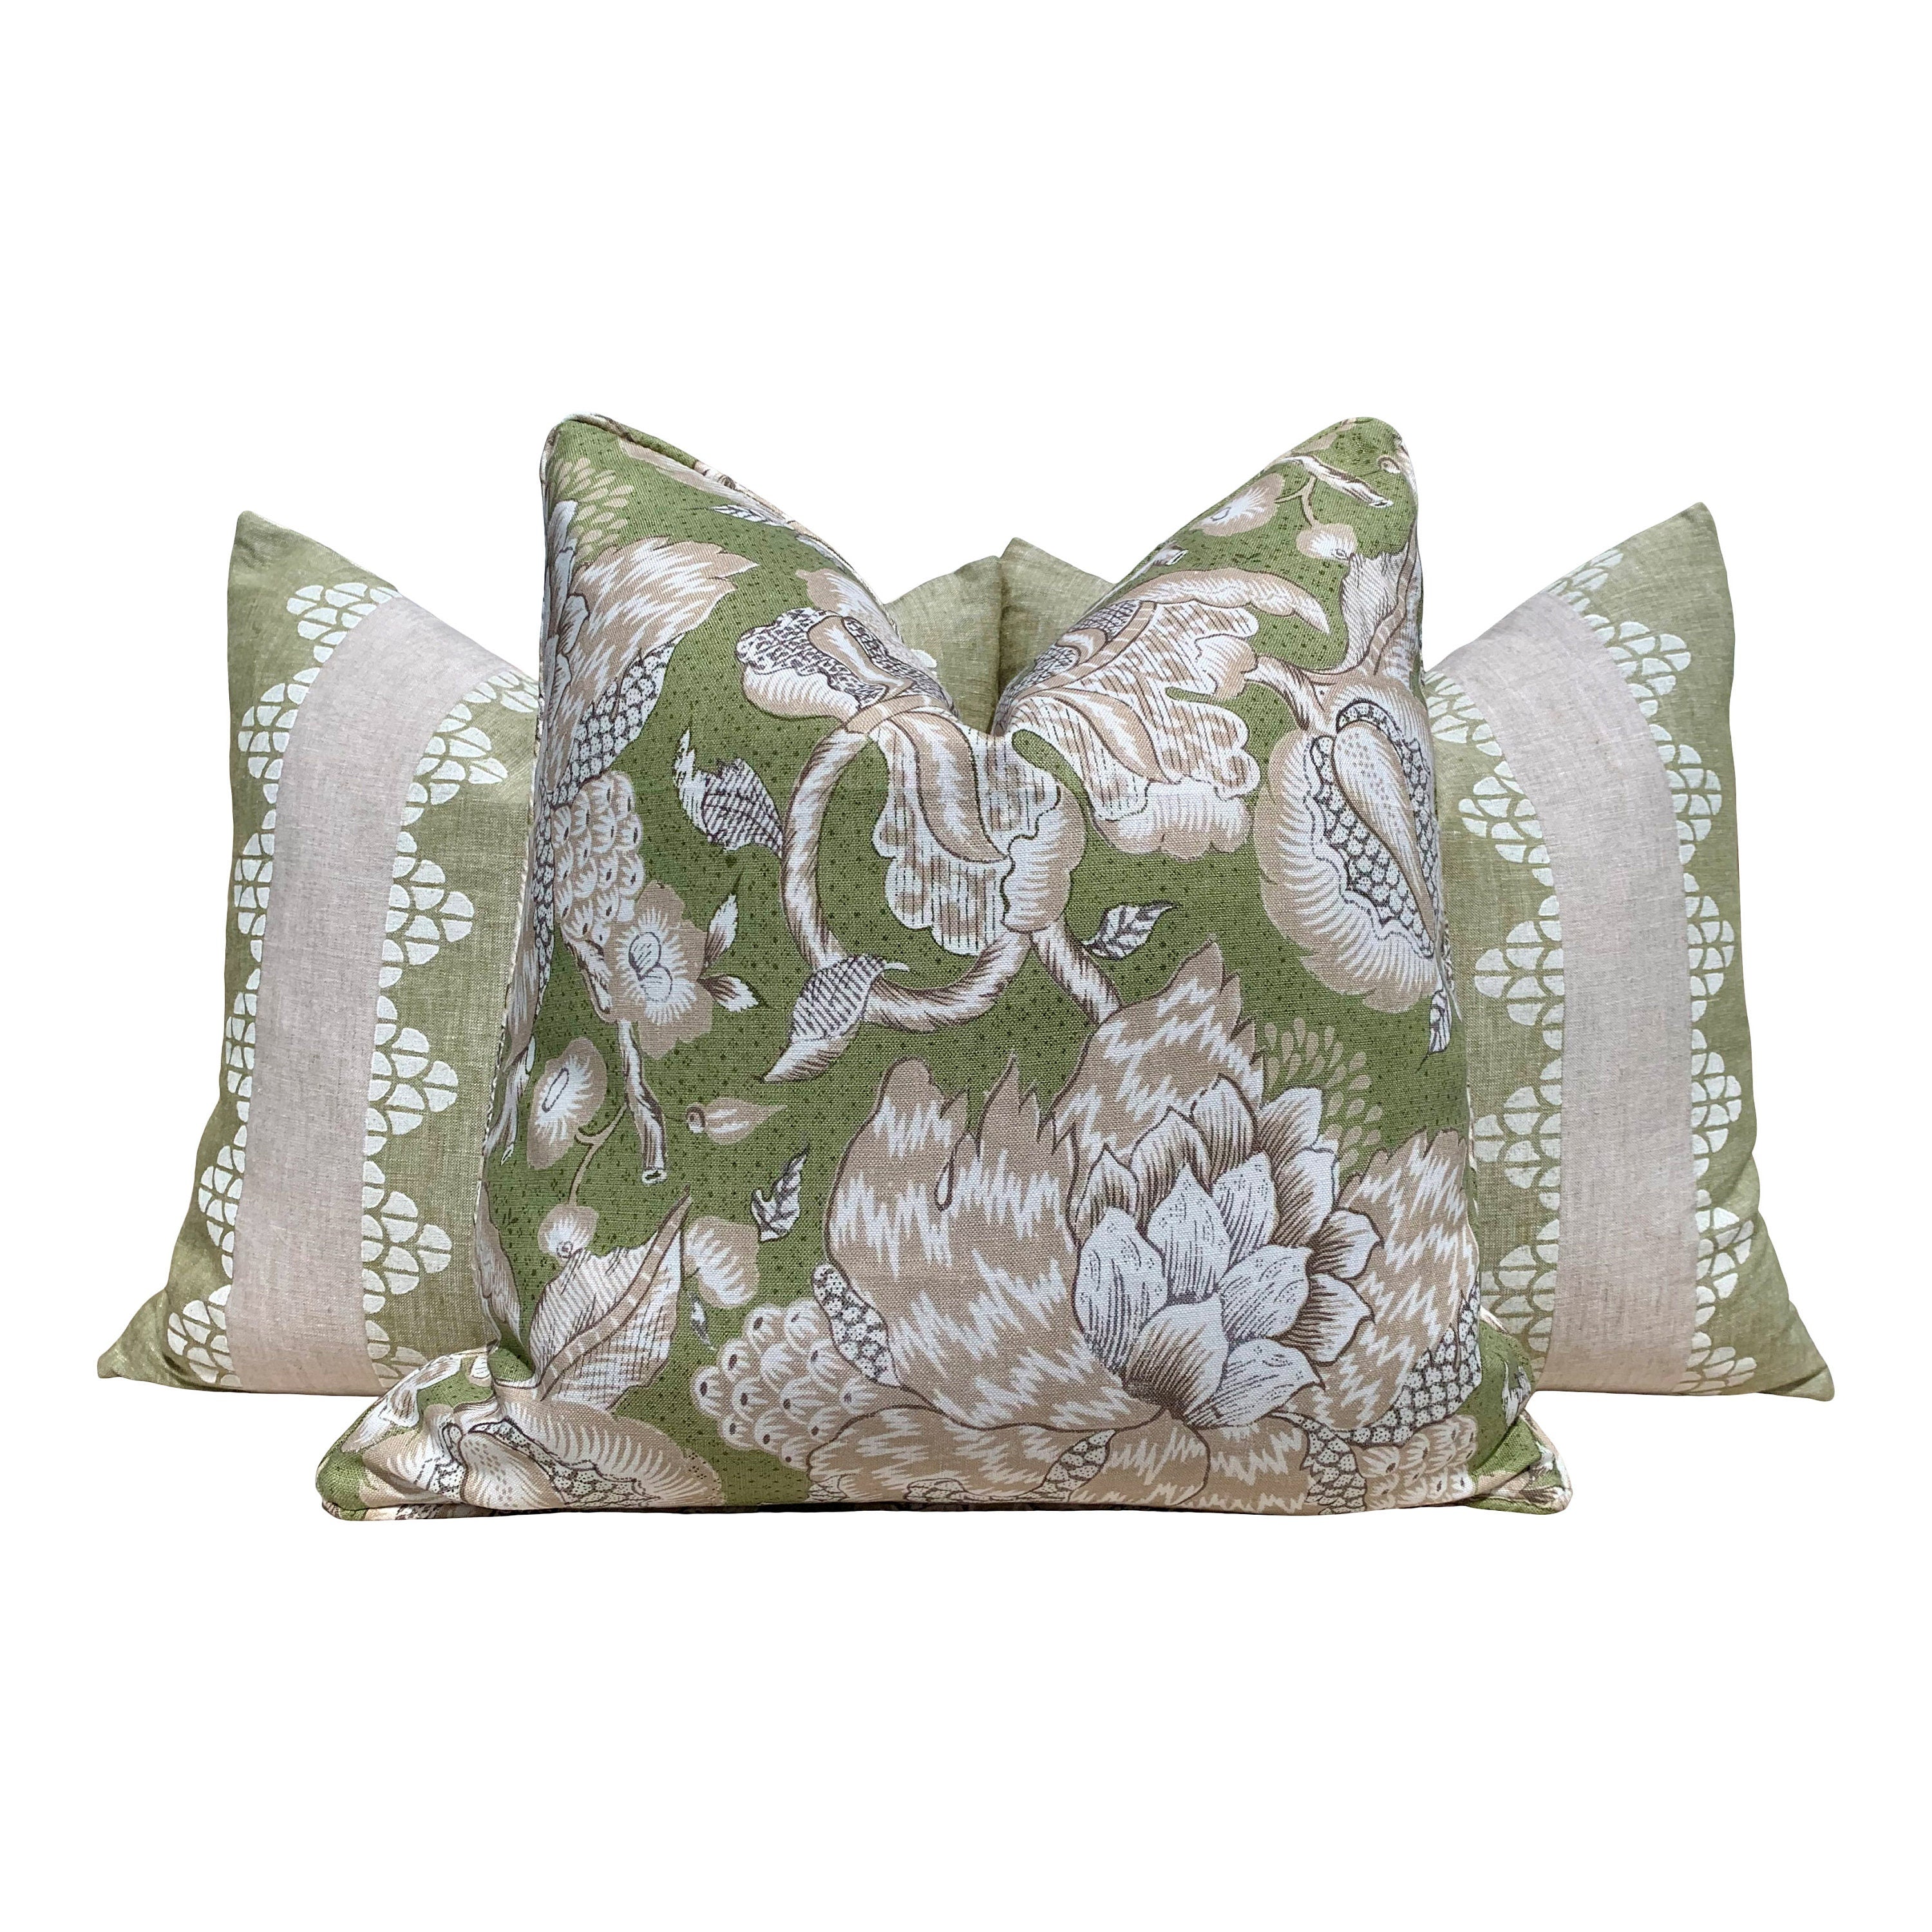 Thiabut Westmont Pillow Green. Lumbar Green Pillow, Euro Sham Pillow, Floral Accent Pillow, Green Tan Designer Cushion Cover, Bedding Pillow